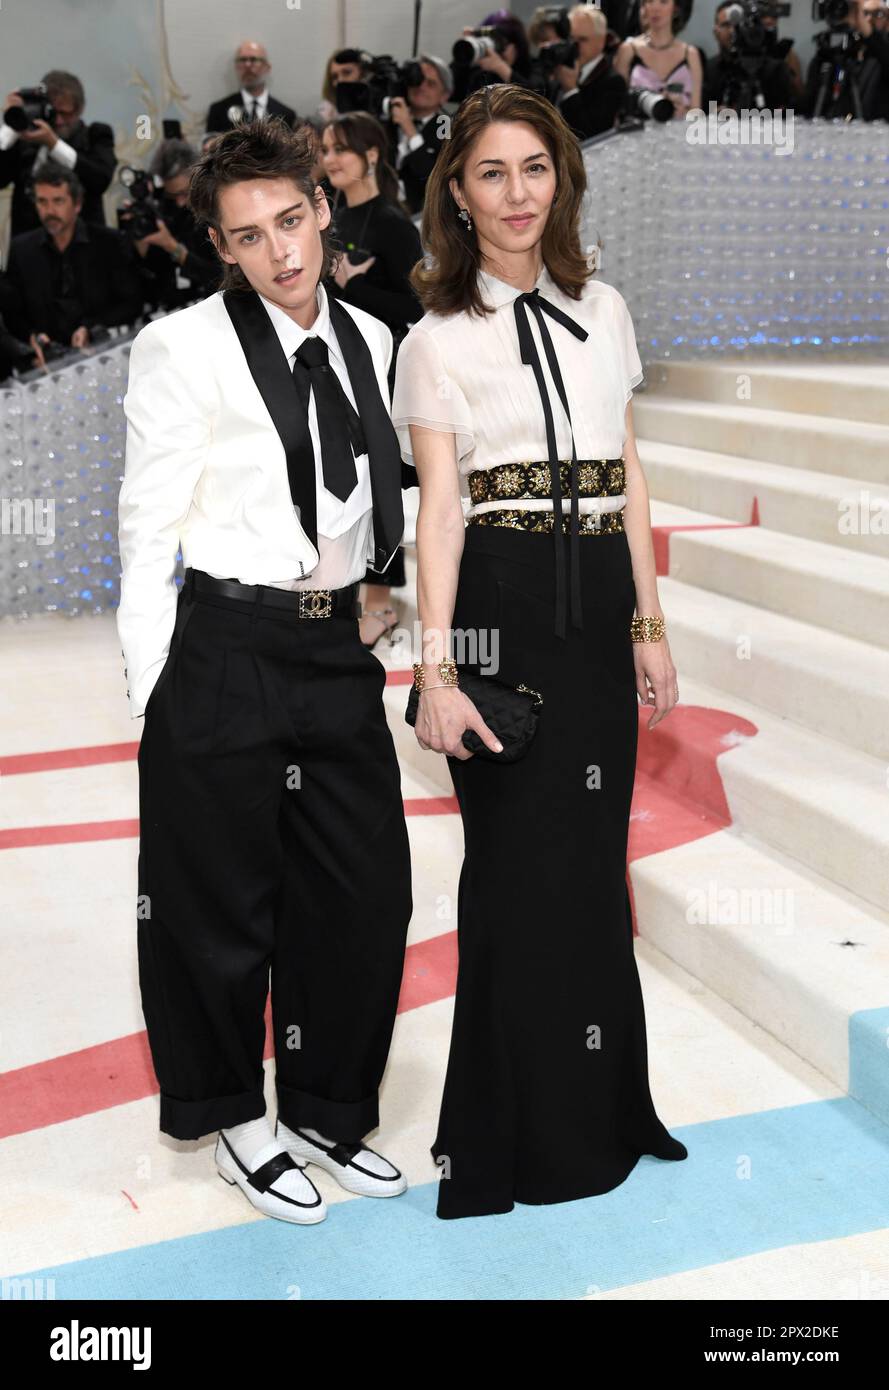 Kristen Stewart, left, and Sofia Coppola attend The Metropolitan